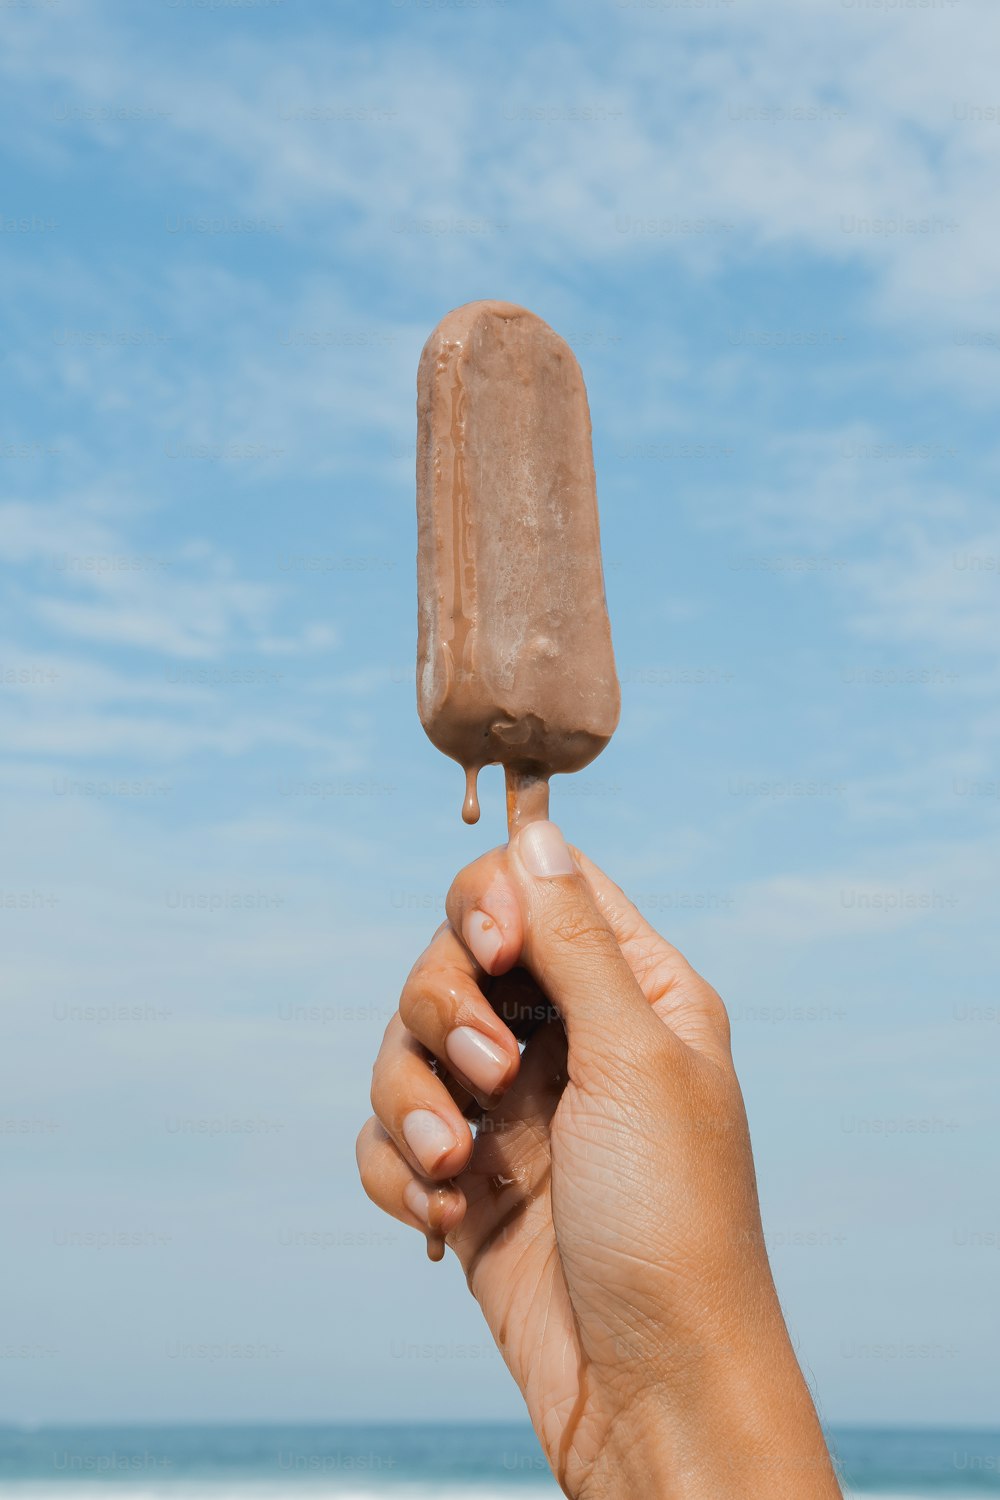 a hand holding a chocolate ice cream on a stick